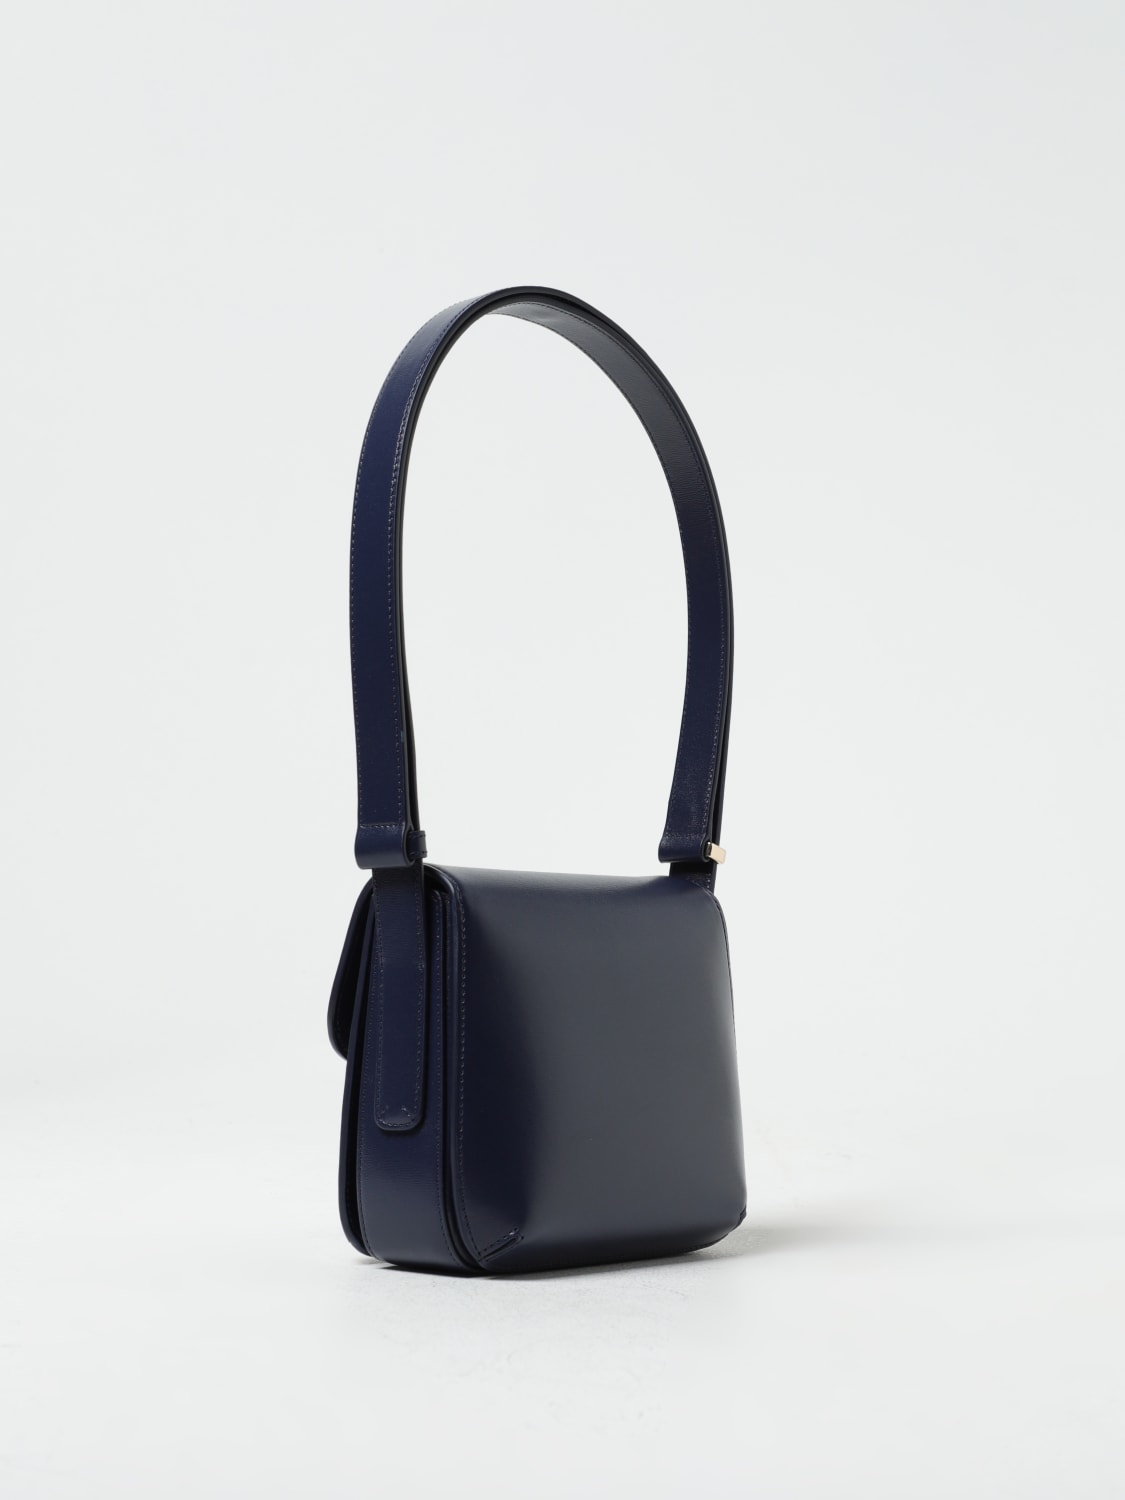 Giorgio Armani Cell Phone Crossbody Bag - Blue Leather